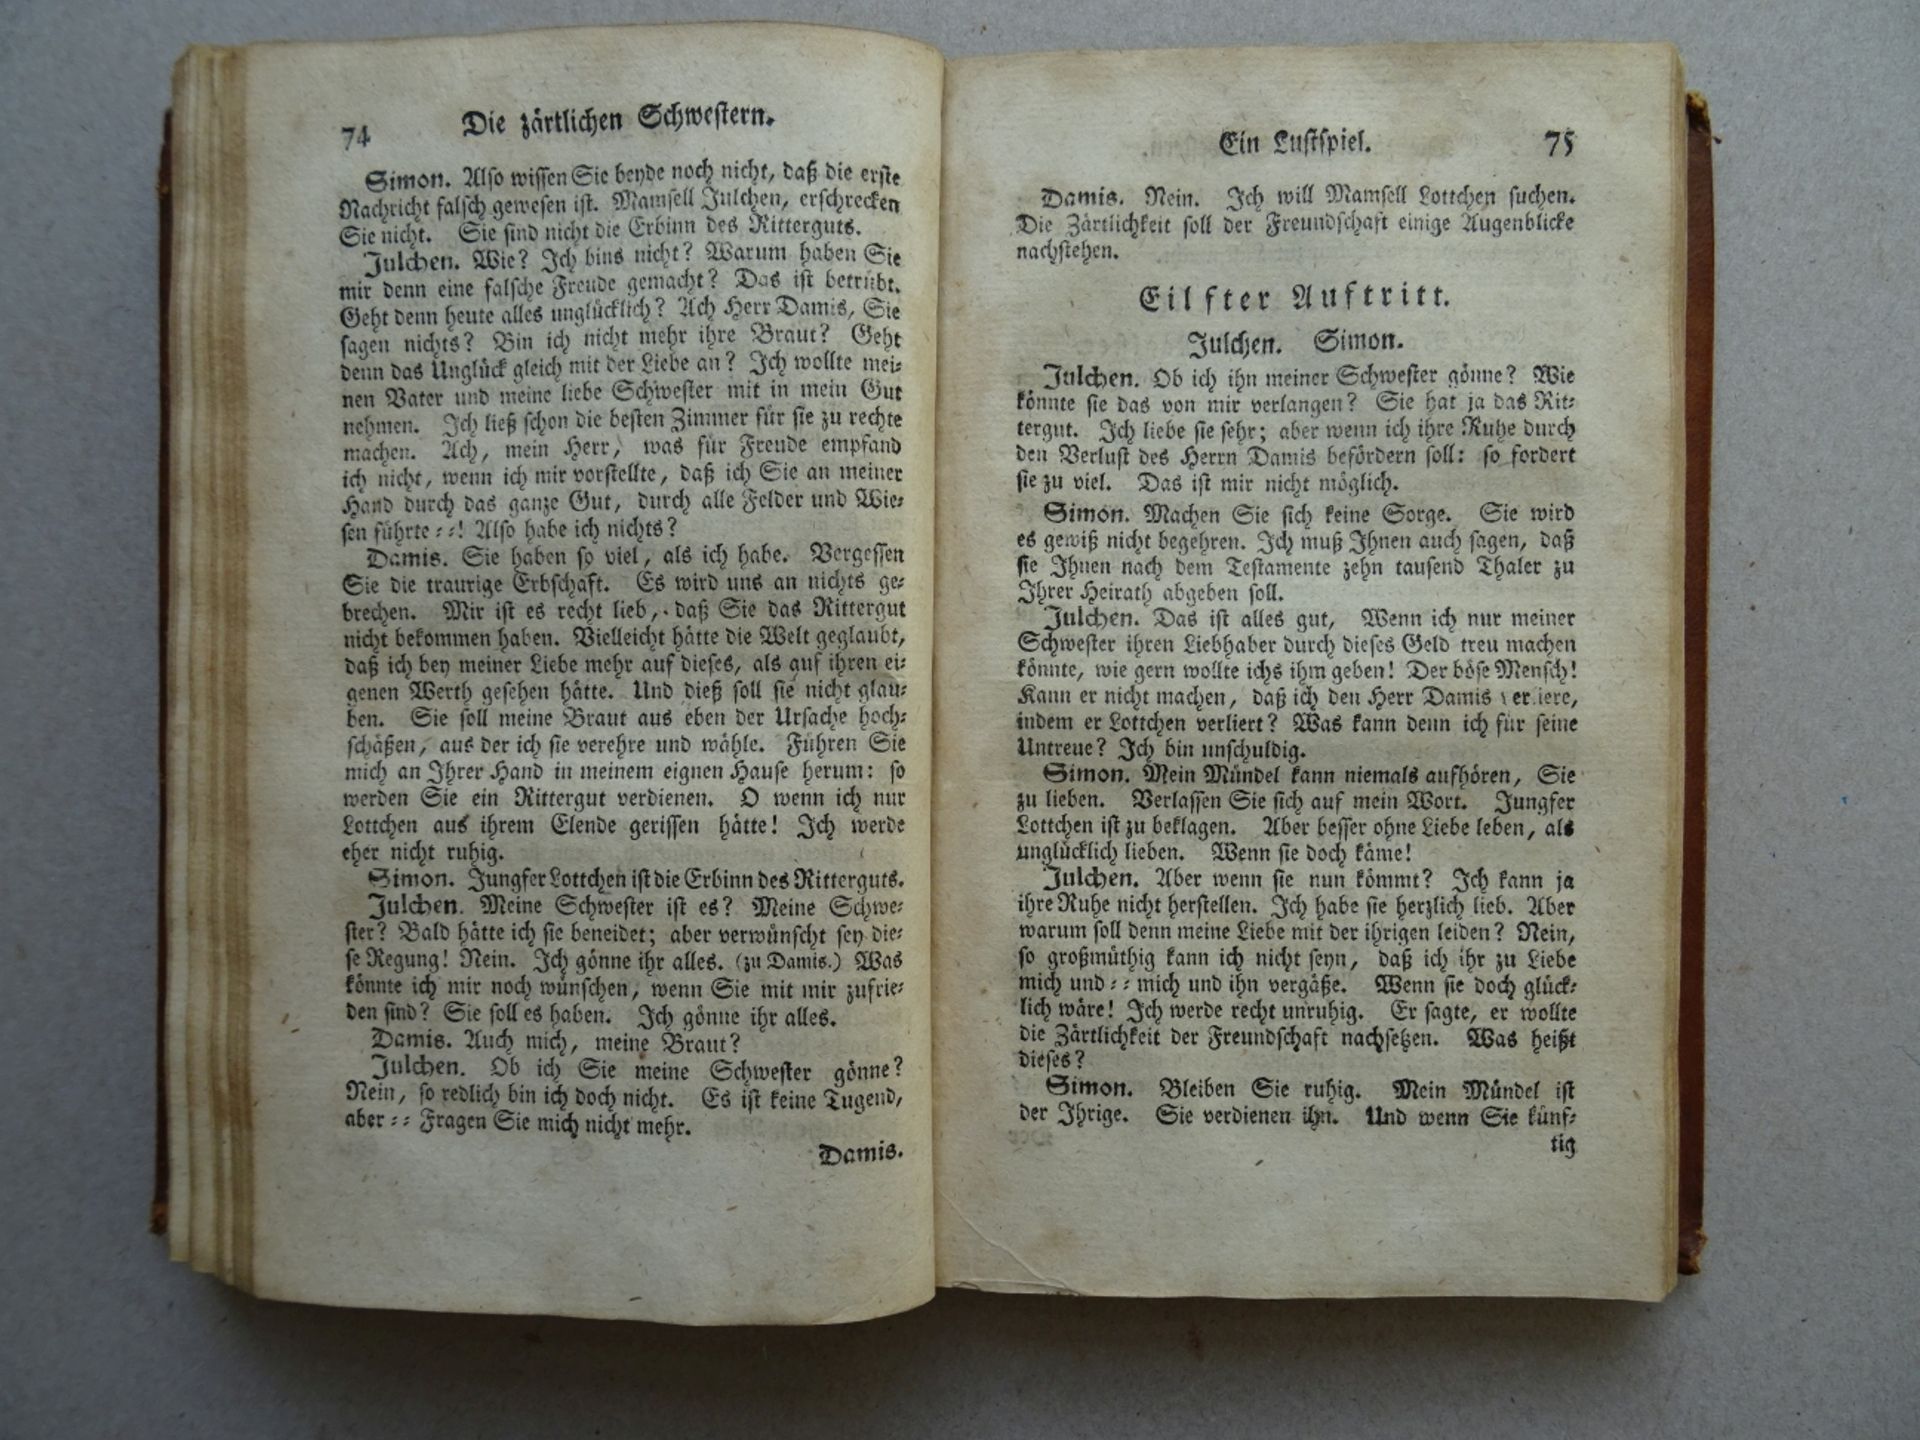 Gellert - Gräfin (Schriften) 3 in 1 Bd - Image 2 of 4